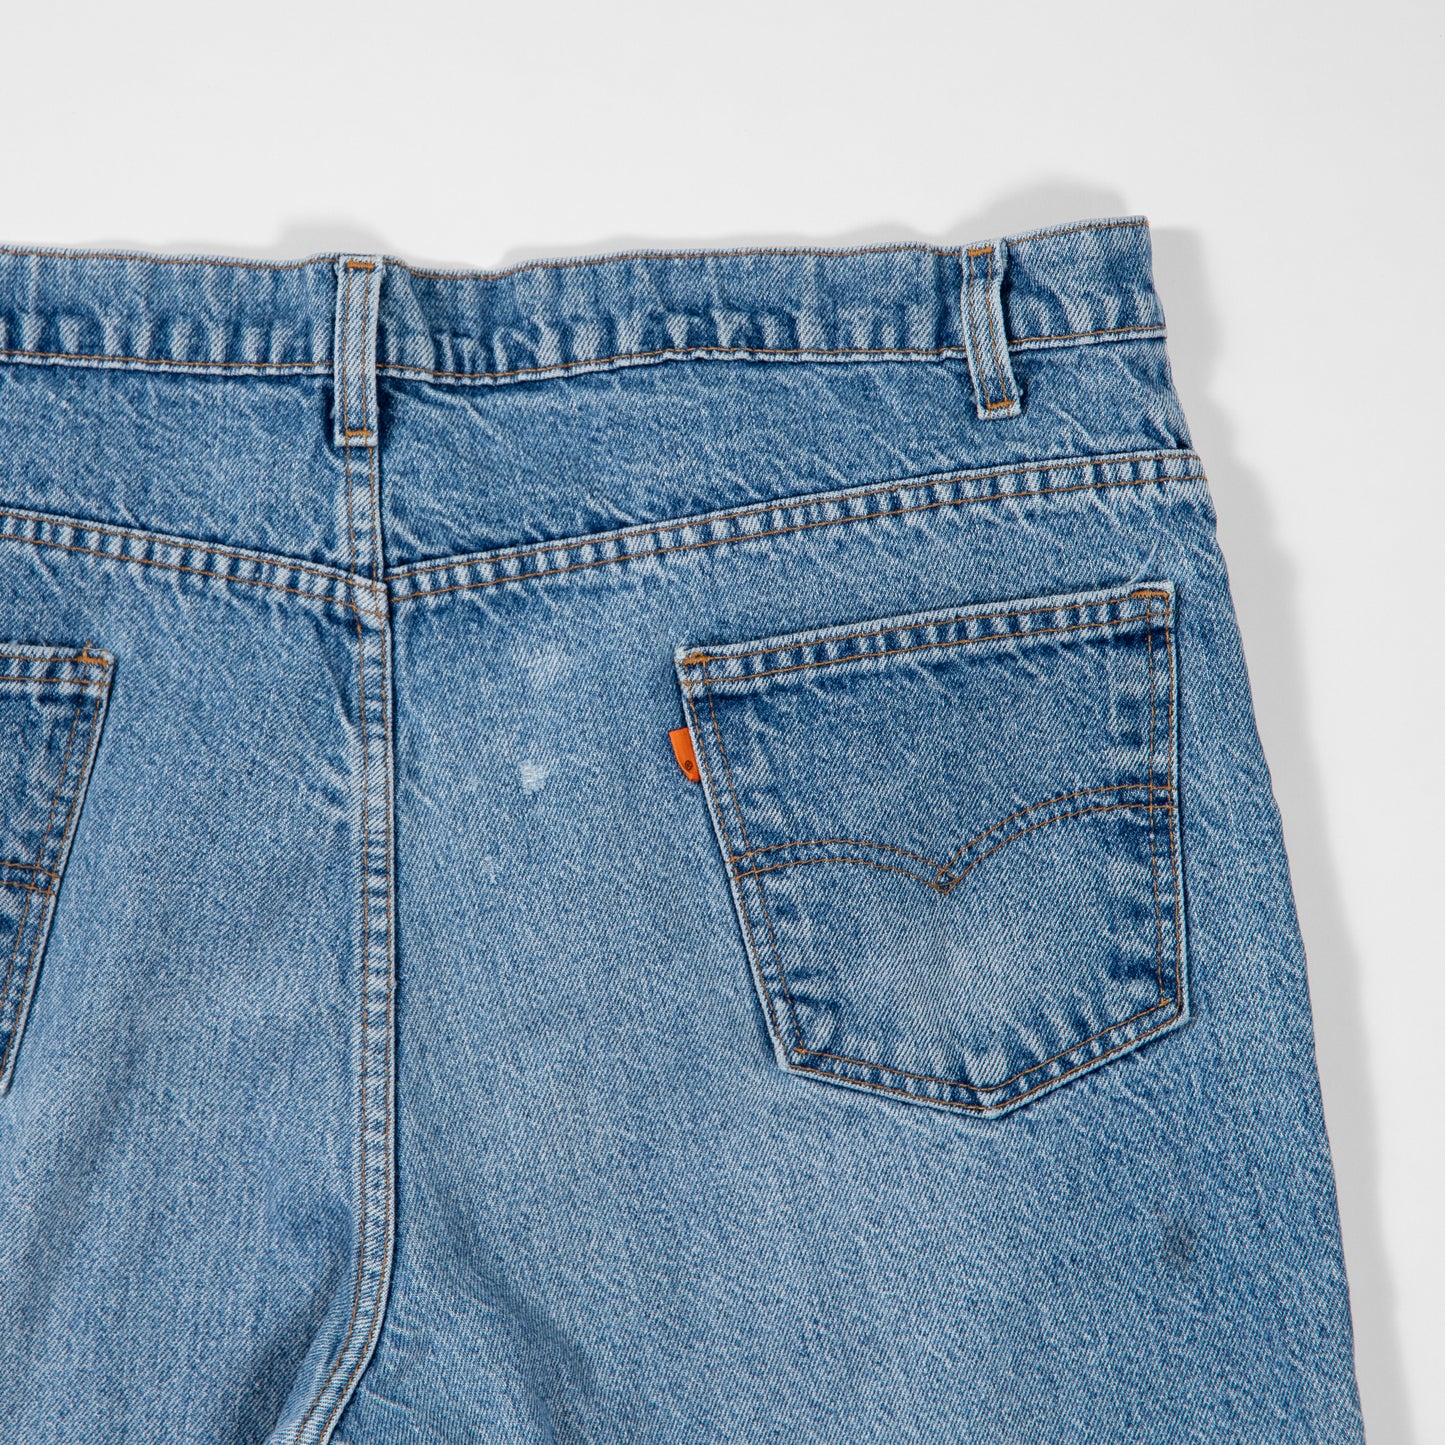 90s Levi's Orange Tab Jeans